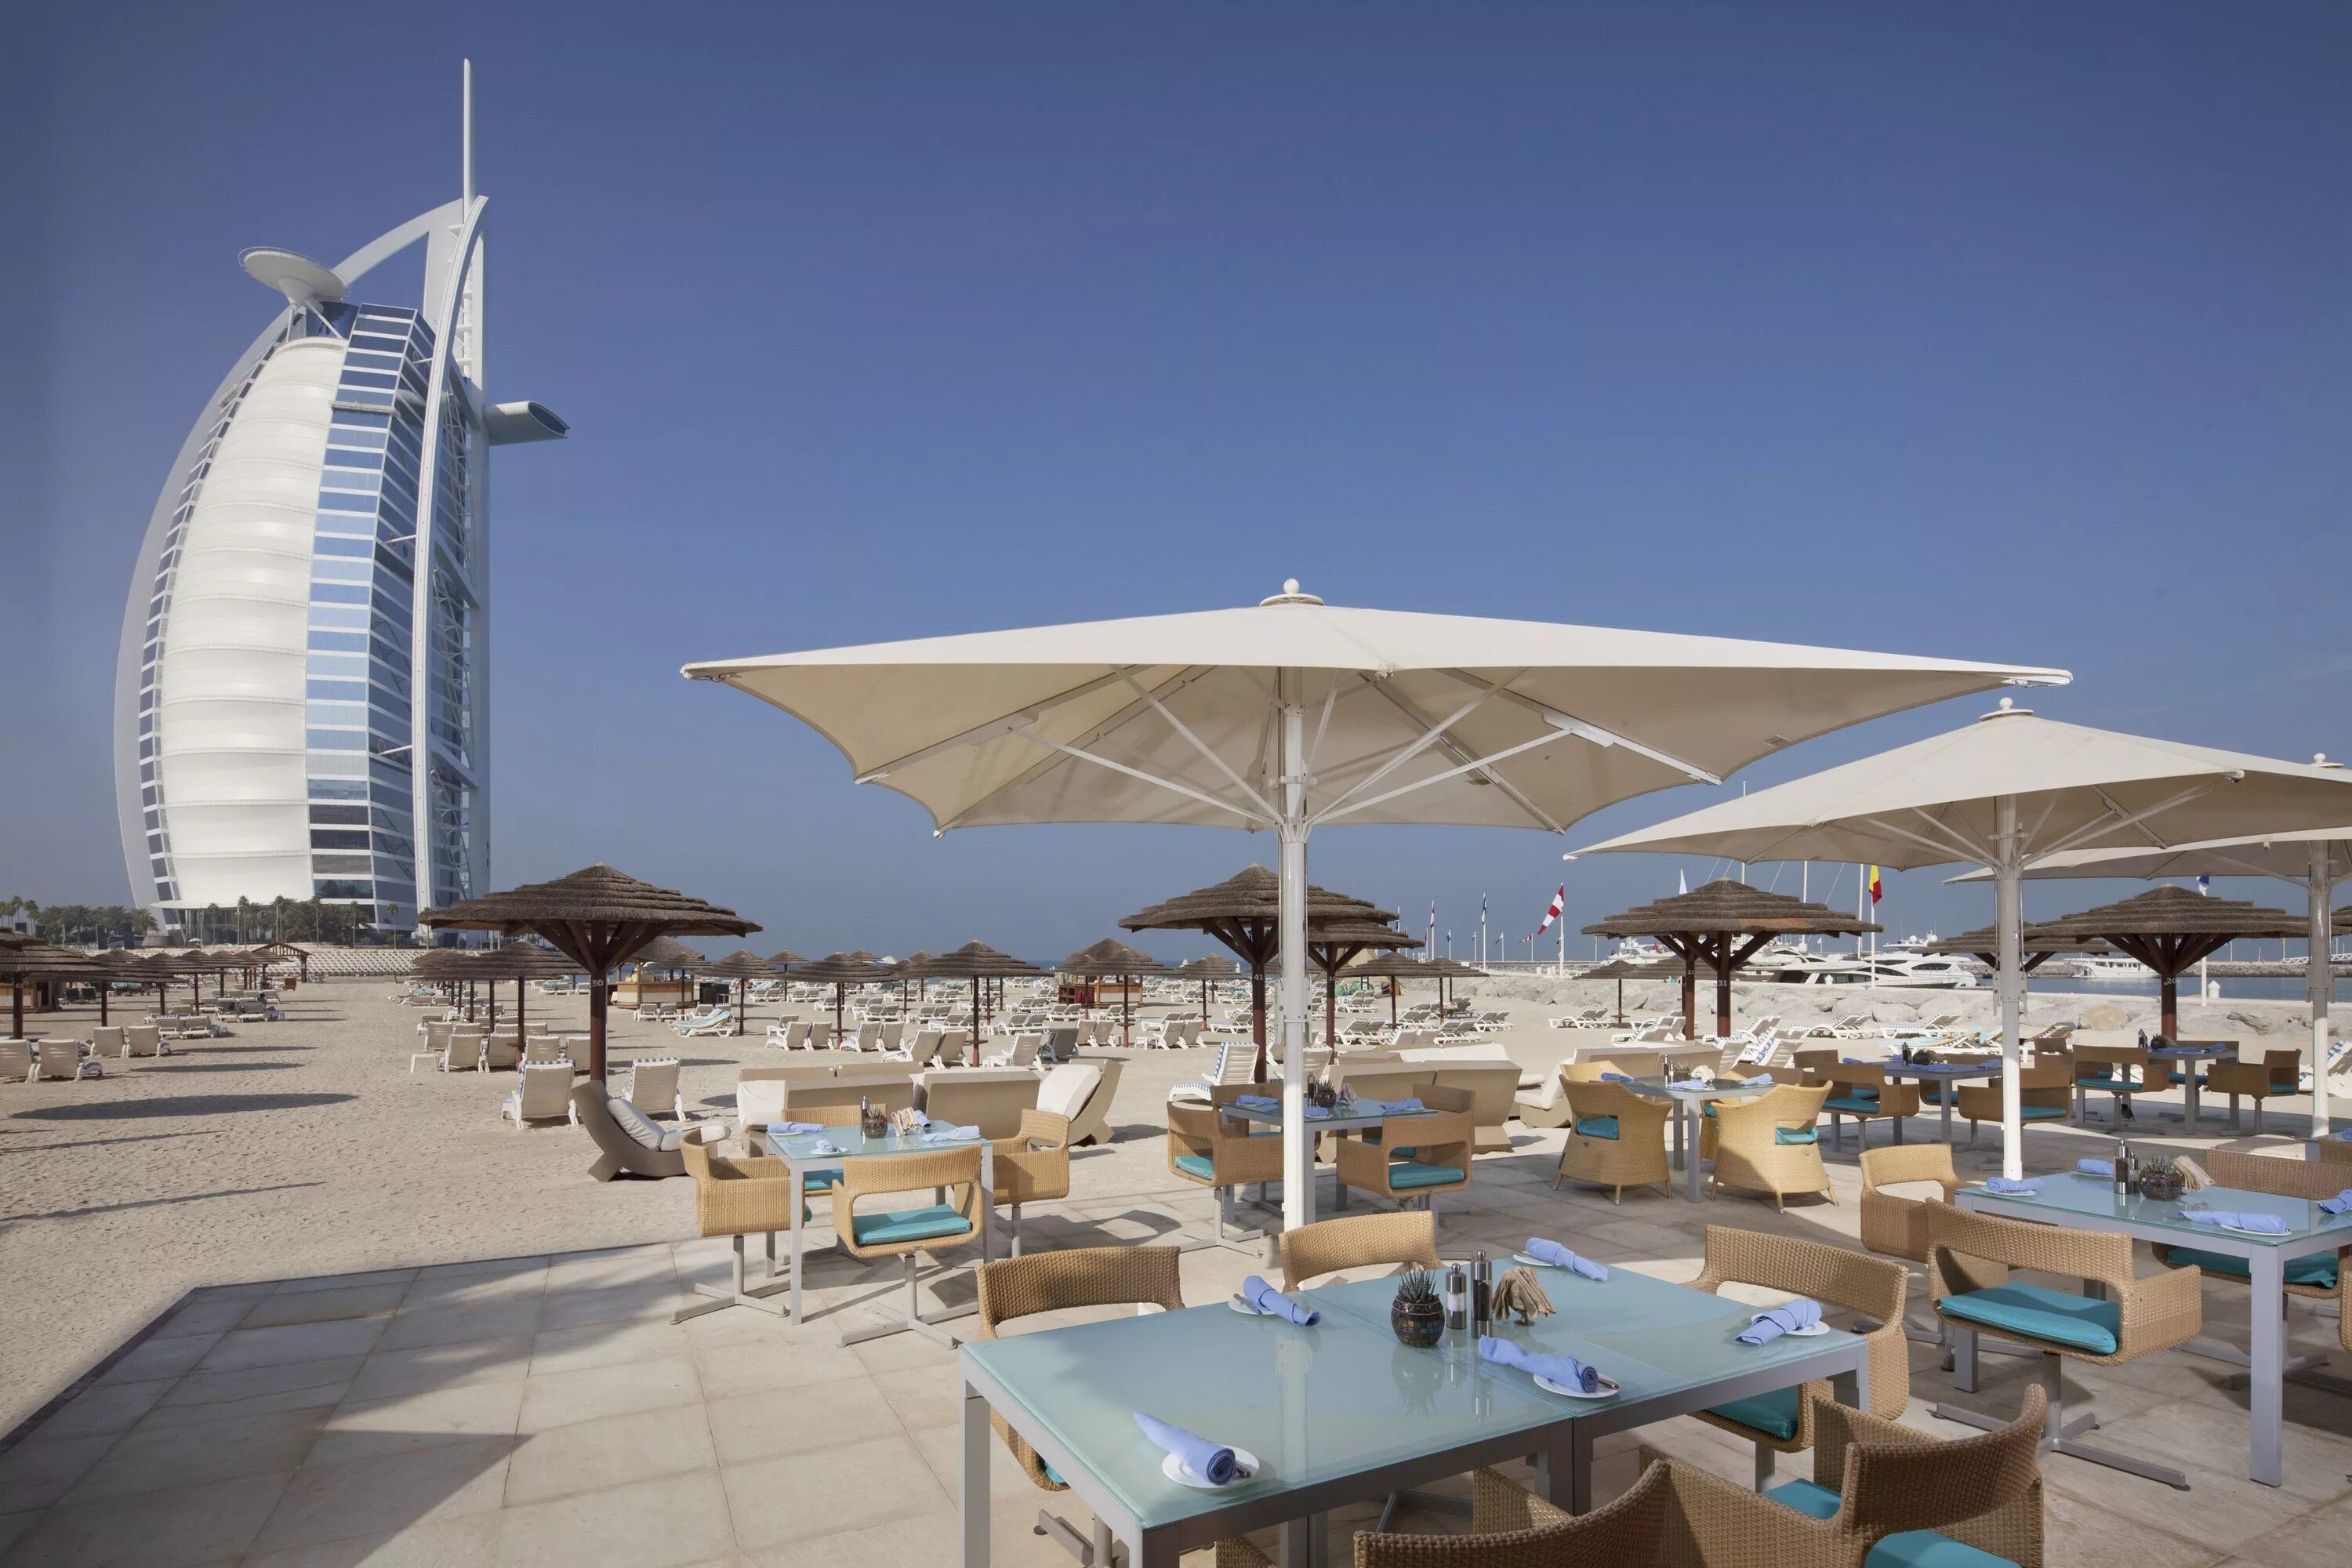 Park regis by prince dubai islands 4. Jumeirah Beach Hotel 5. Пляж Джумейра в Дубае. Jumeirah Beach Hotel Дубай. Jumeirah Beach пляж Дубай.